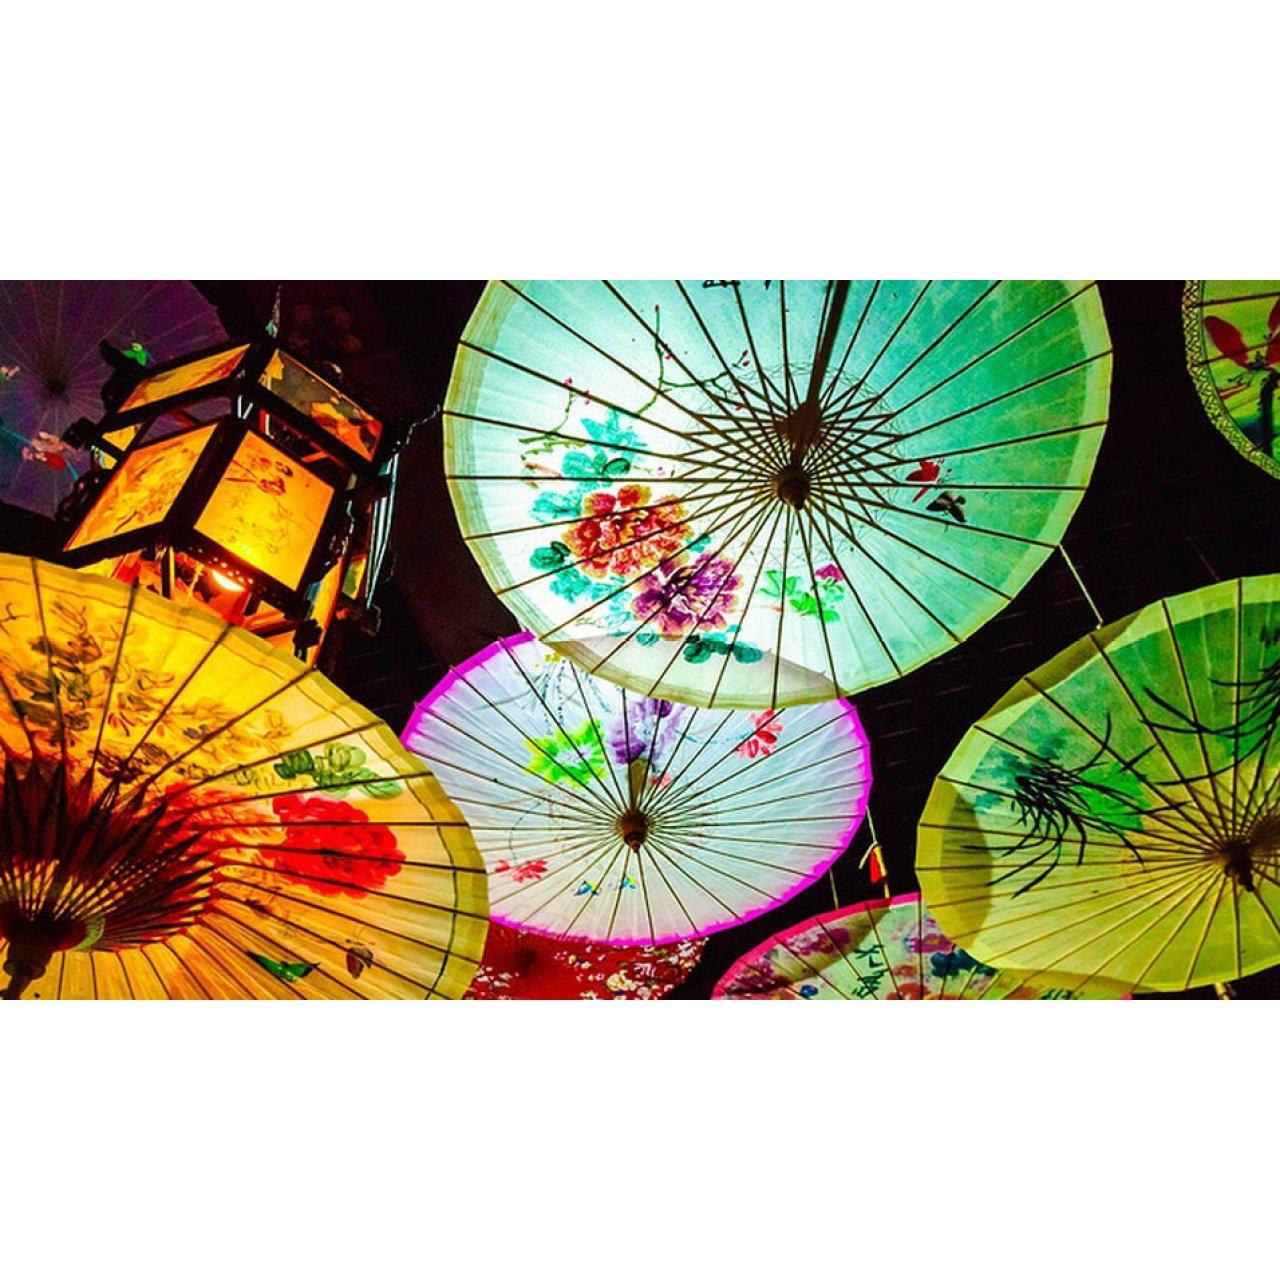 Chinese Traditional Umbrella